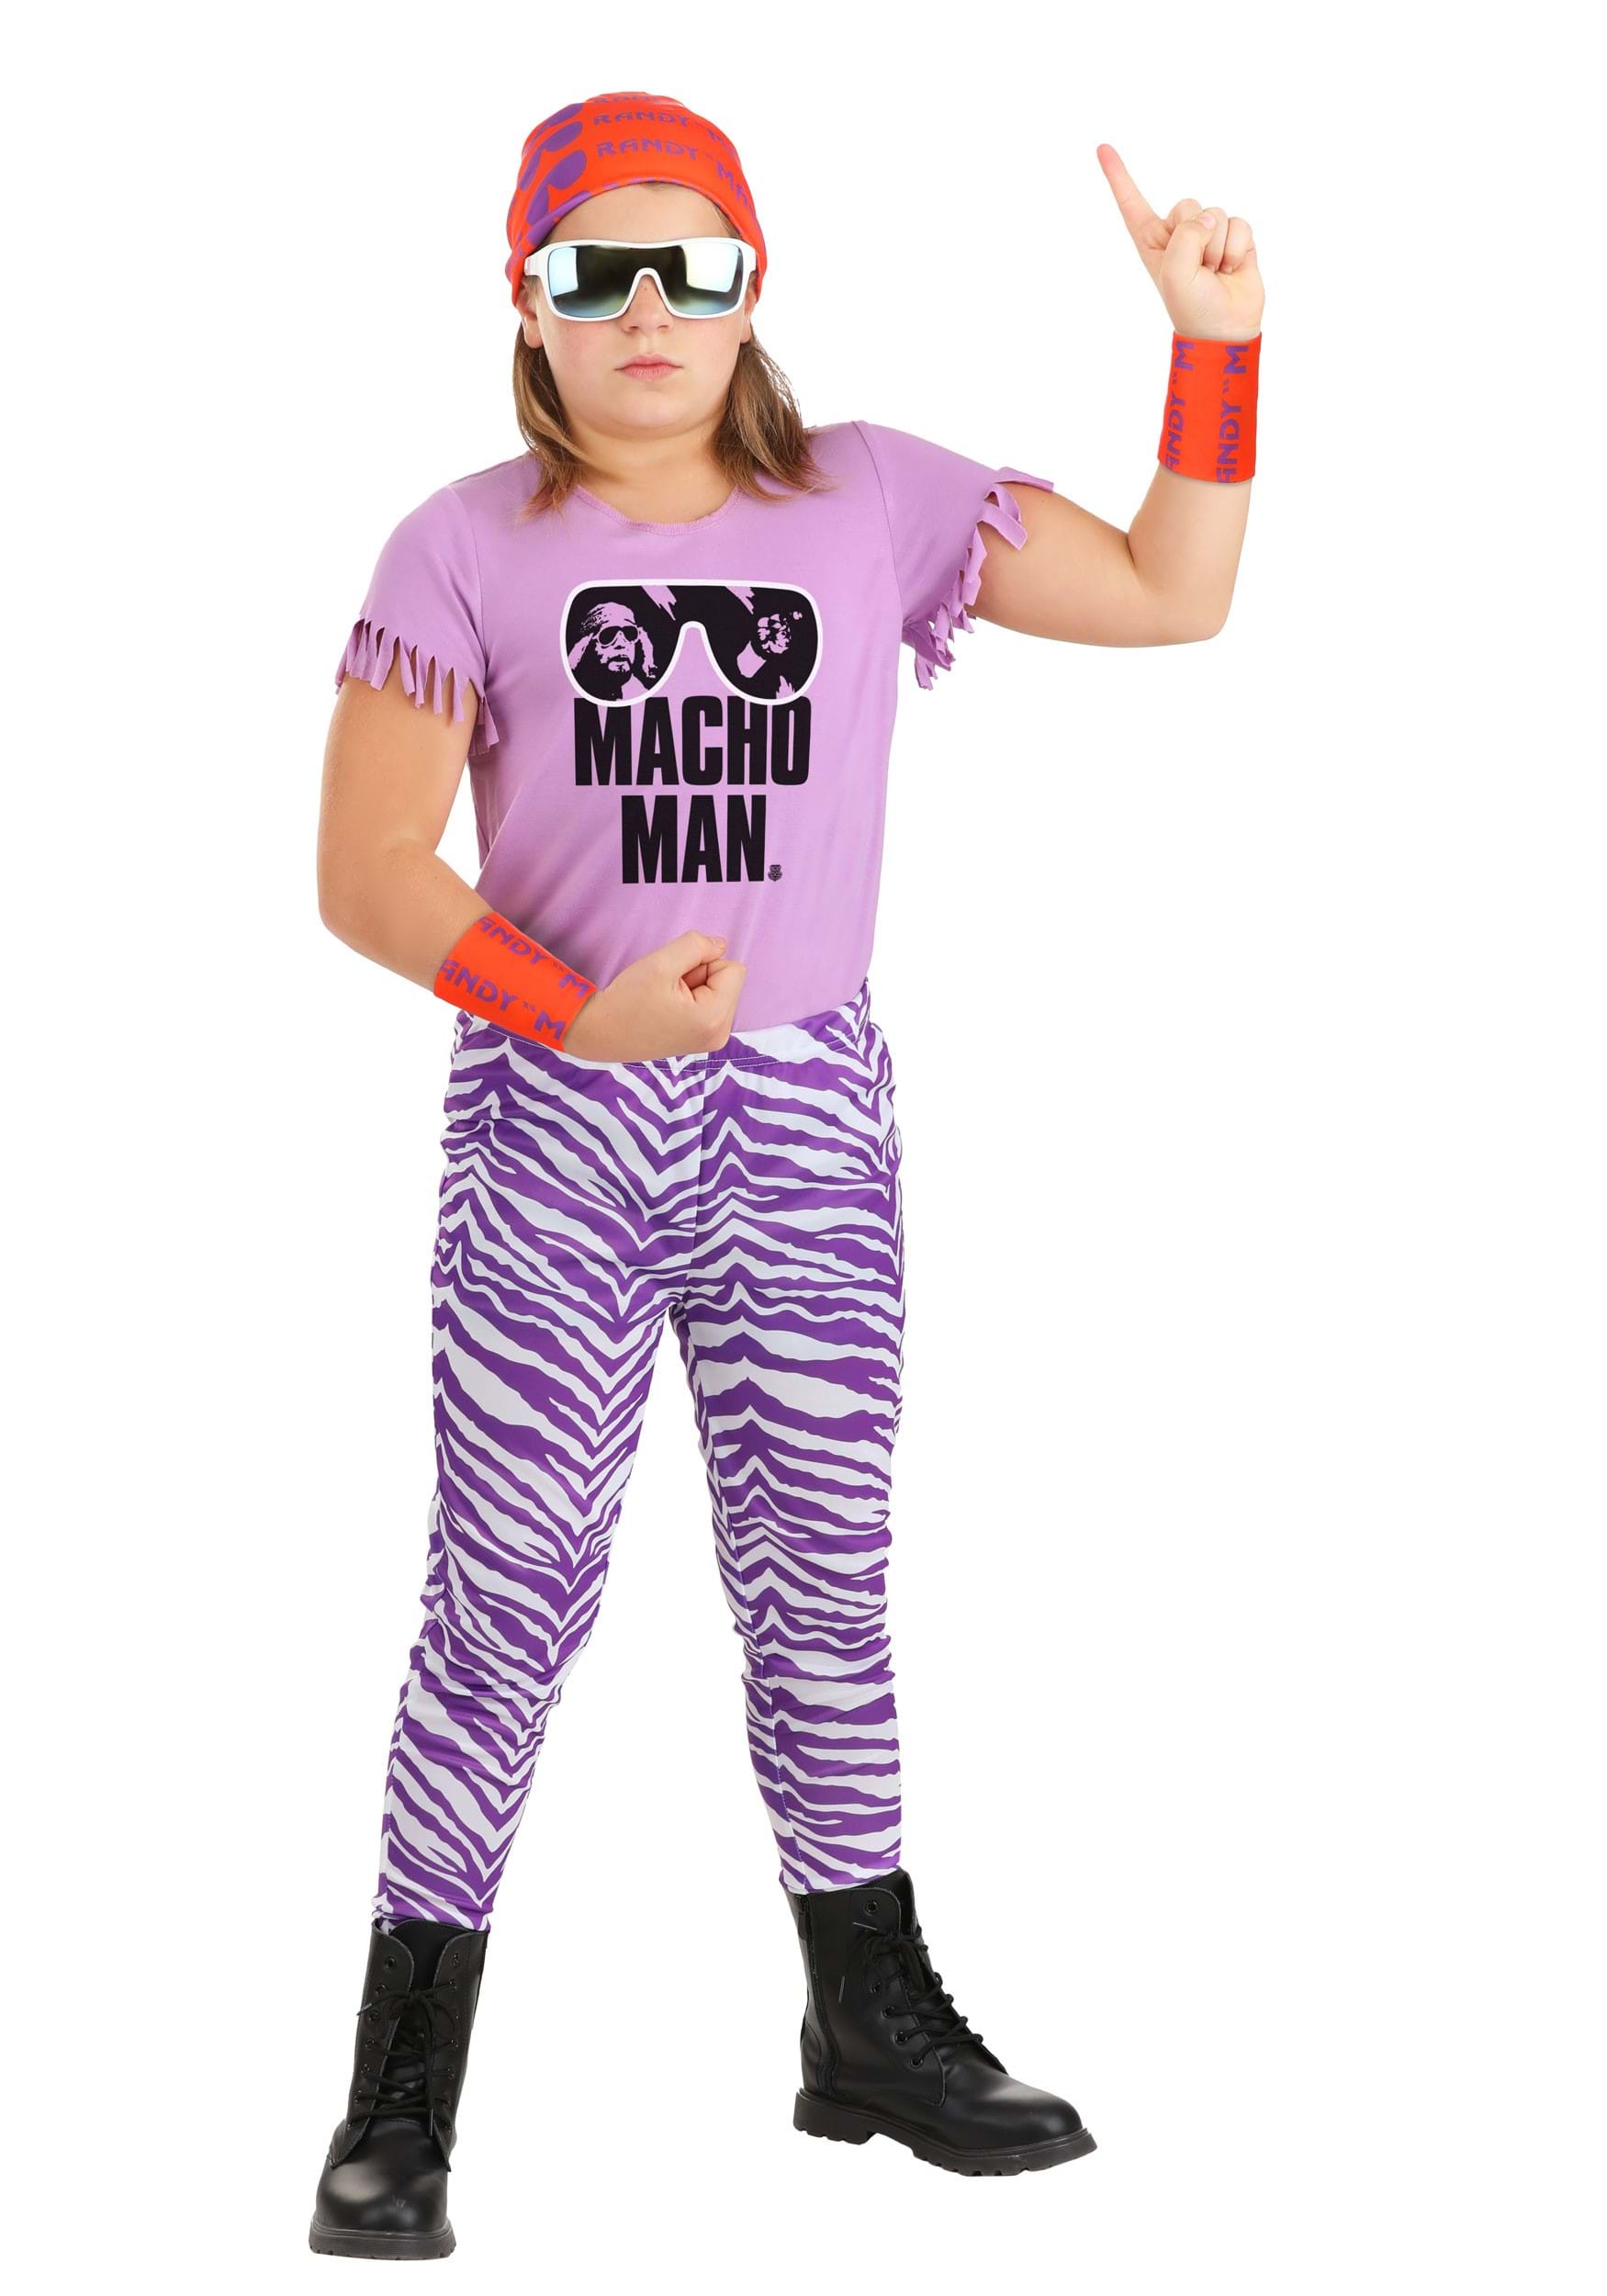 WWE Macho Man Madness Costume | WWE Wrestling Kids Costume